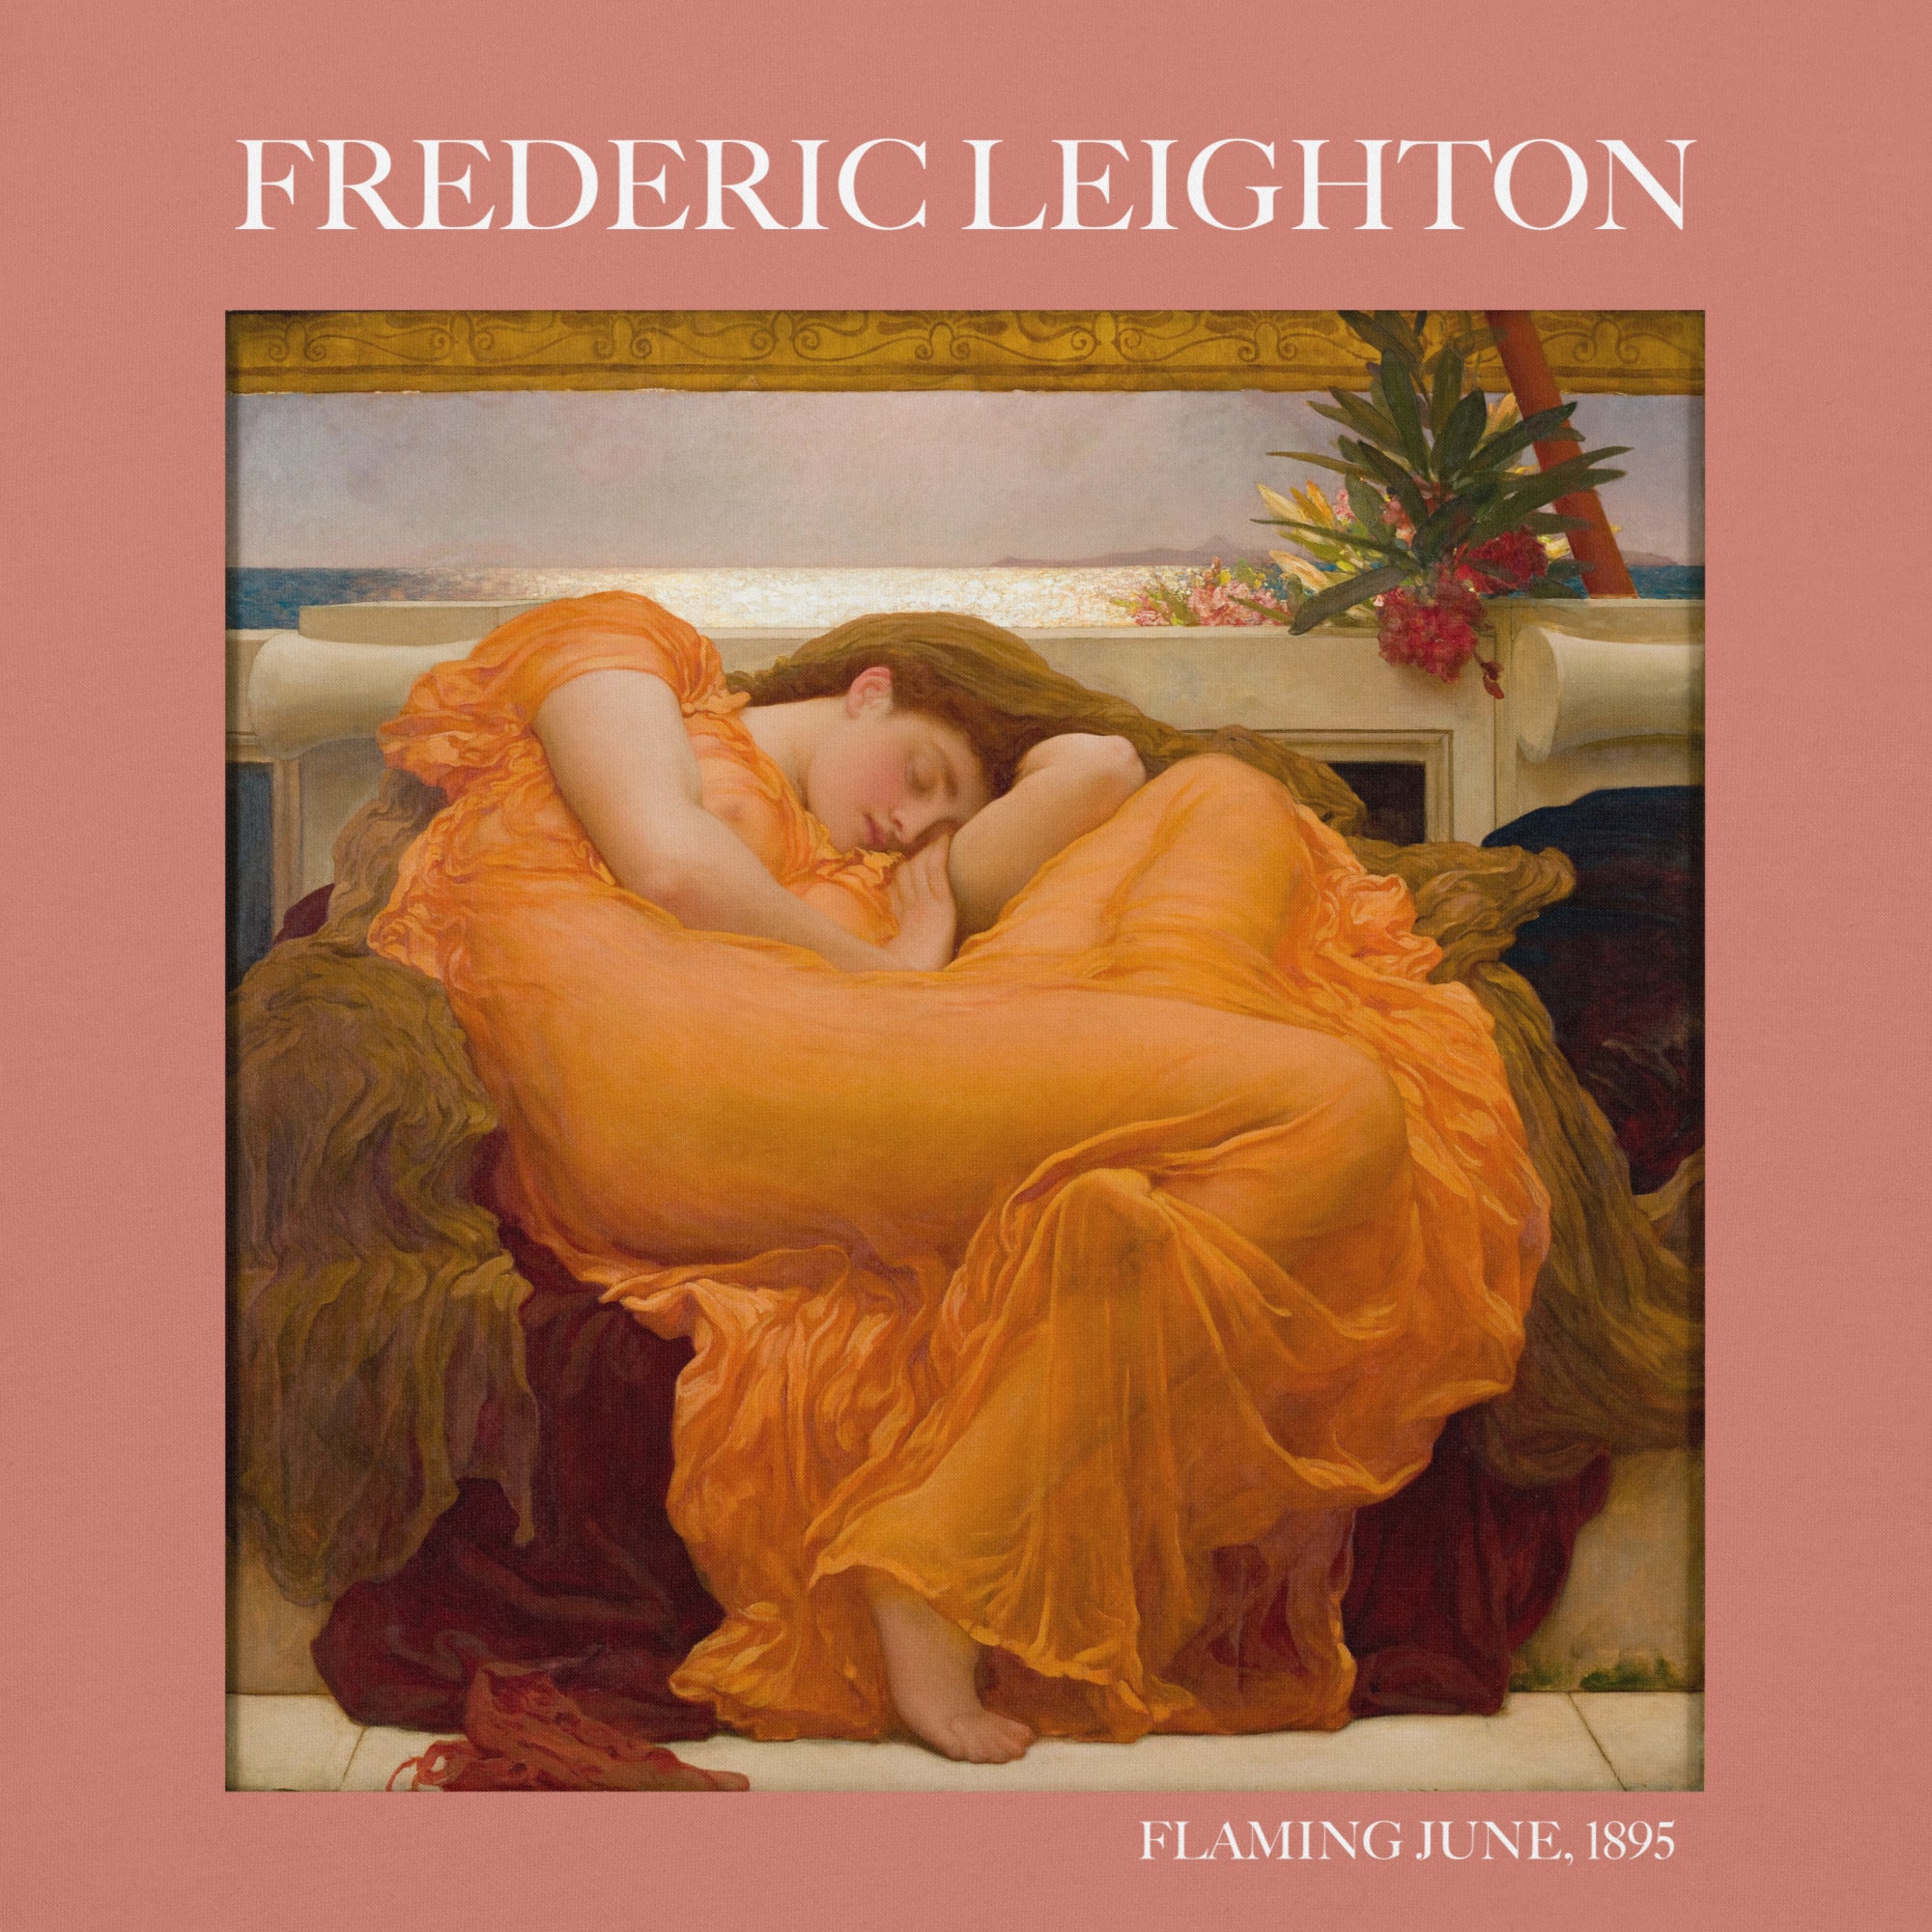 Frederic Leighton 'Flaming June' Famous Painting Hoodie | Unisex Premium Art Hoodie